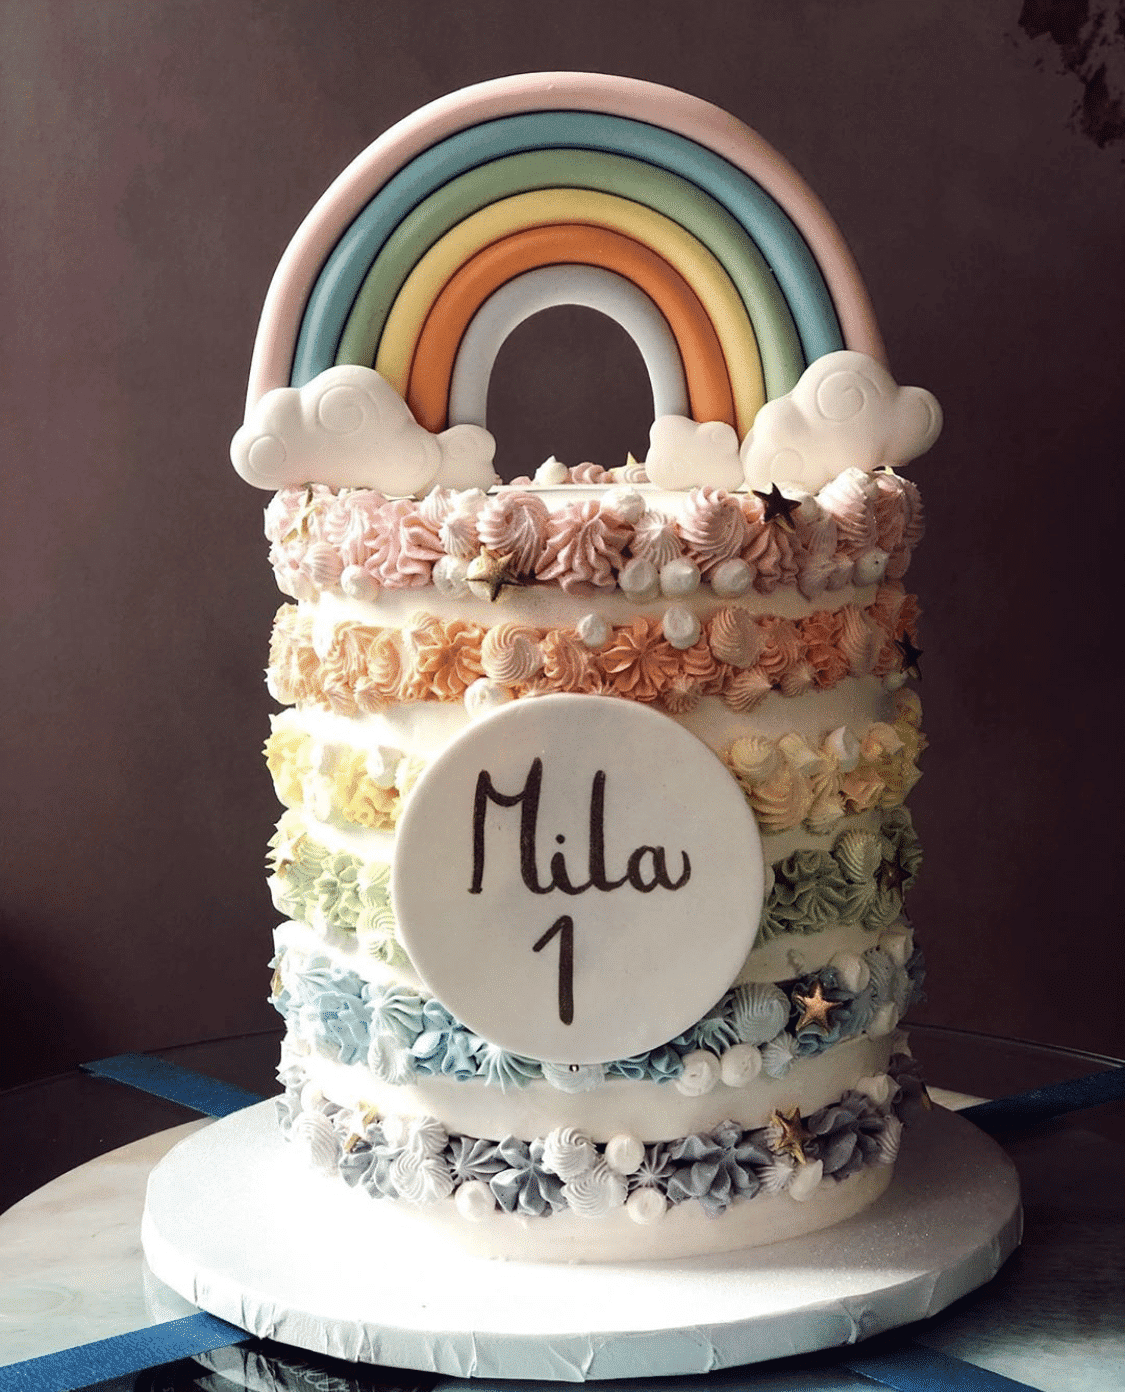 30 Places To Buy An Amazing Birthday Cake Around Miami